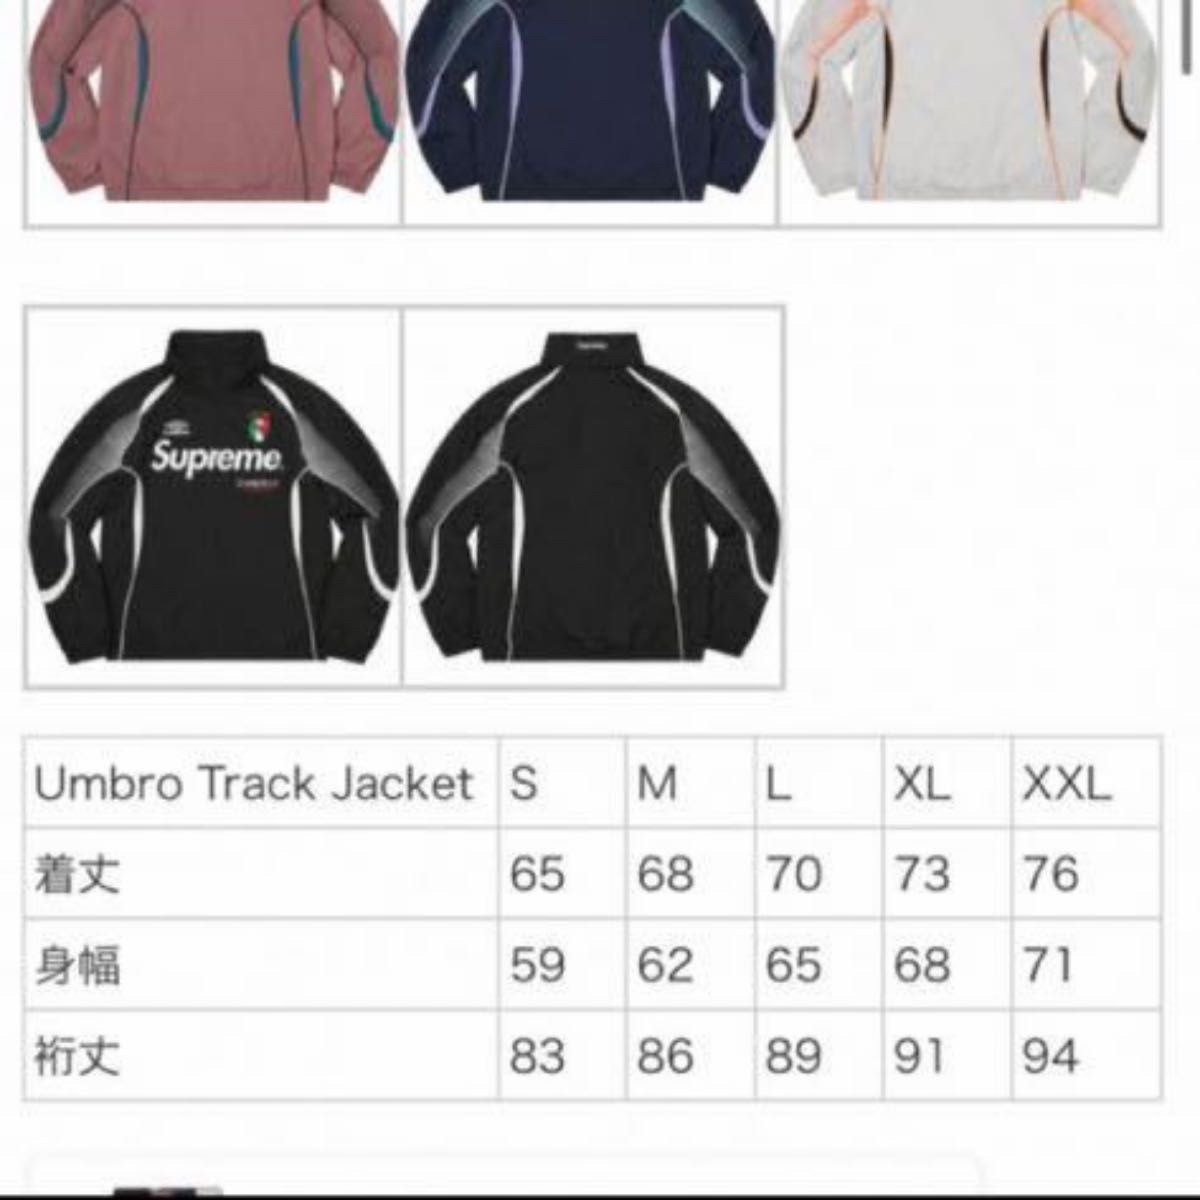 Supreme / Umbro Track Jacket Grey 【XXL】シュプリーム アンブロ